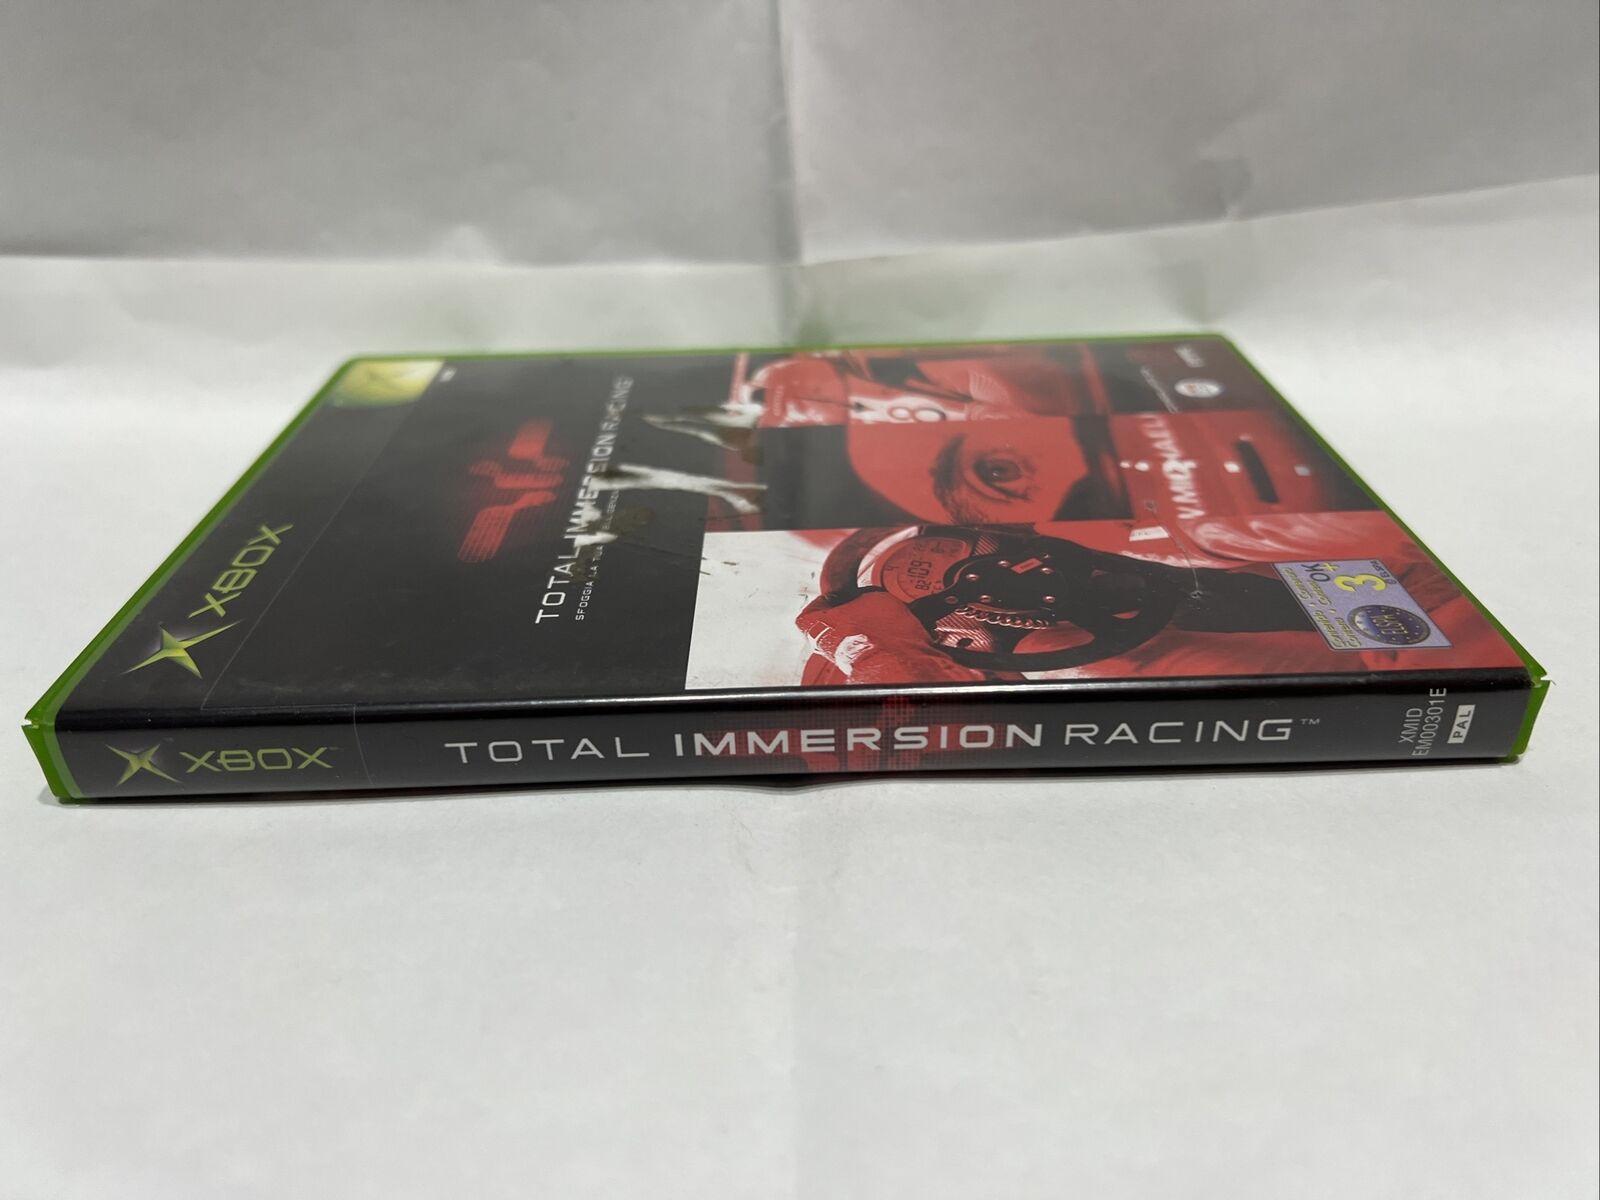 Microsoft-Xbox-Videogioco-Total-Immersion-Racing-Pal-Ita-144327325407-2